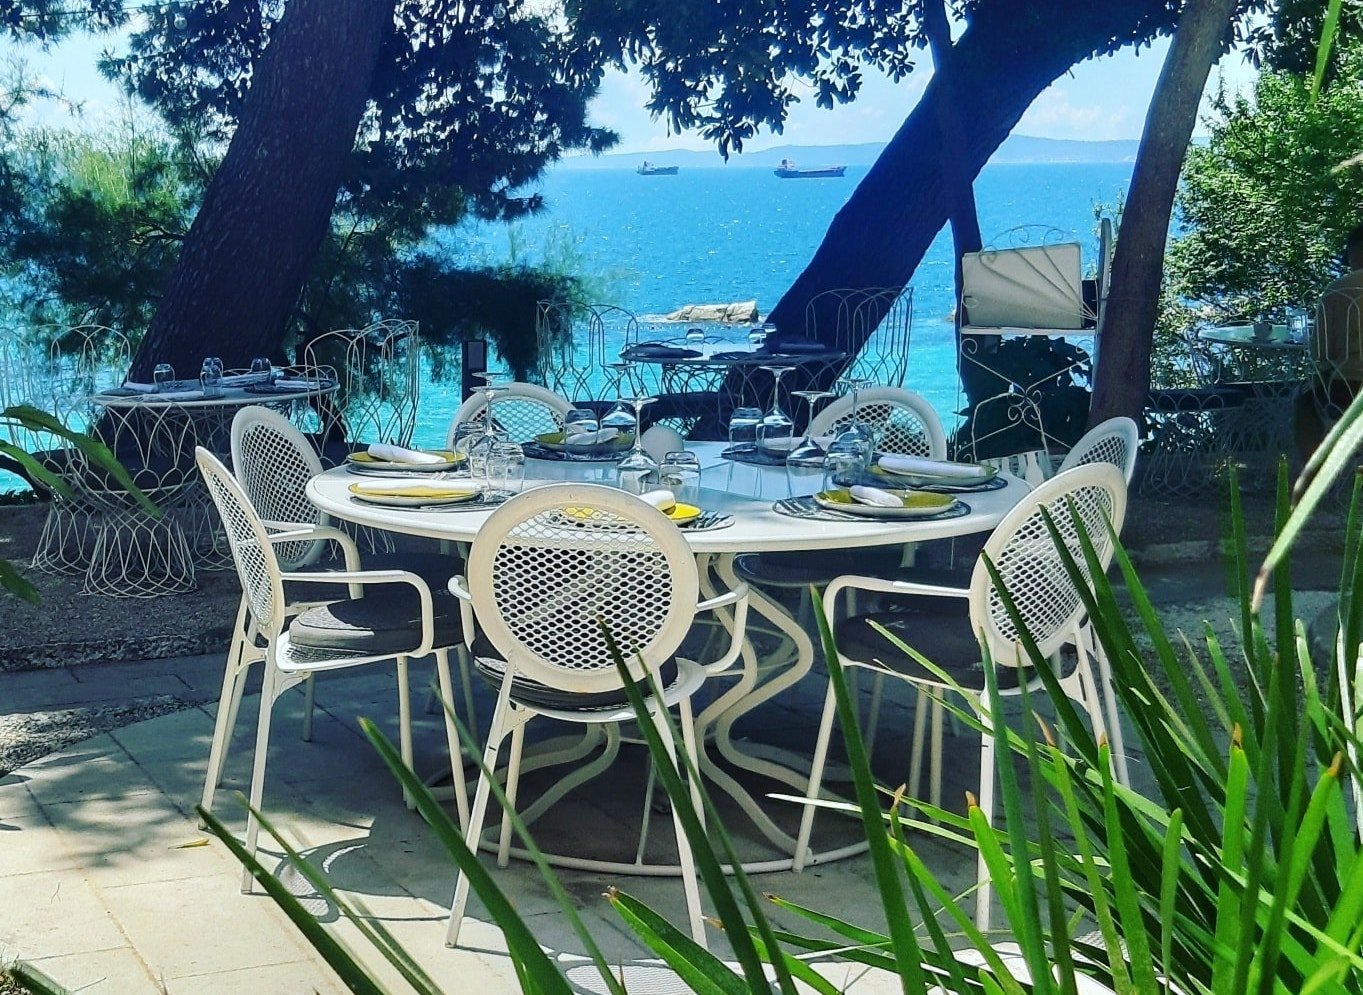 Dvor - Restaurants with a view in Split